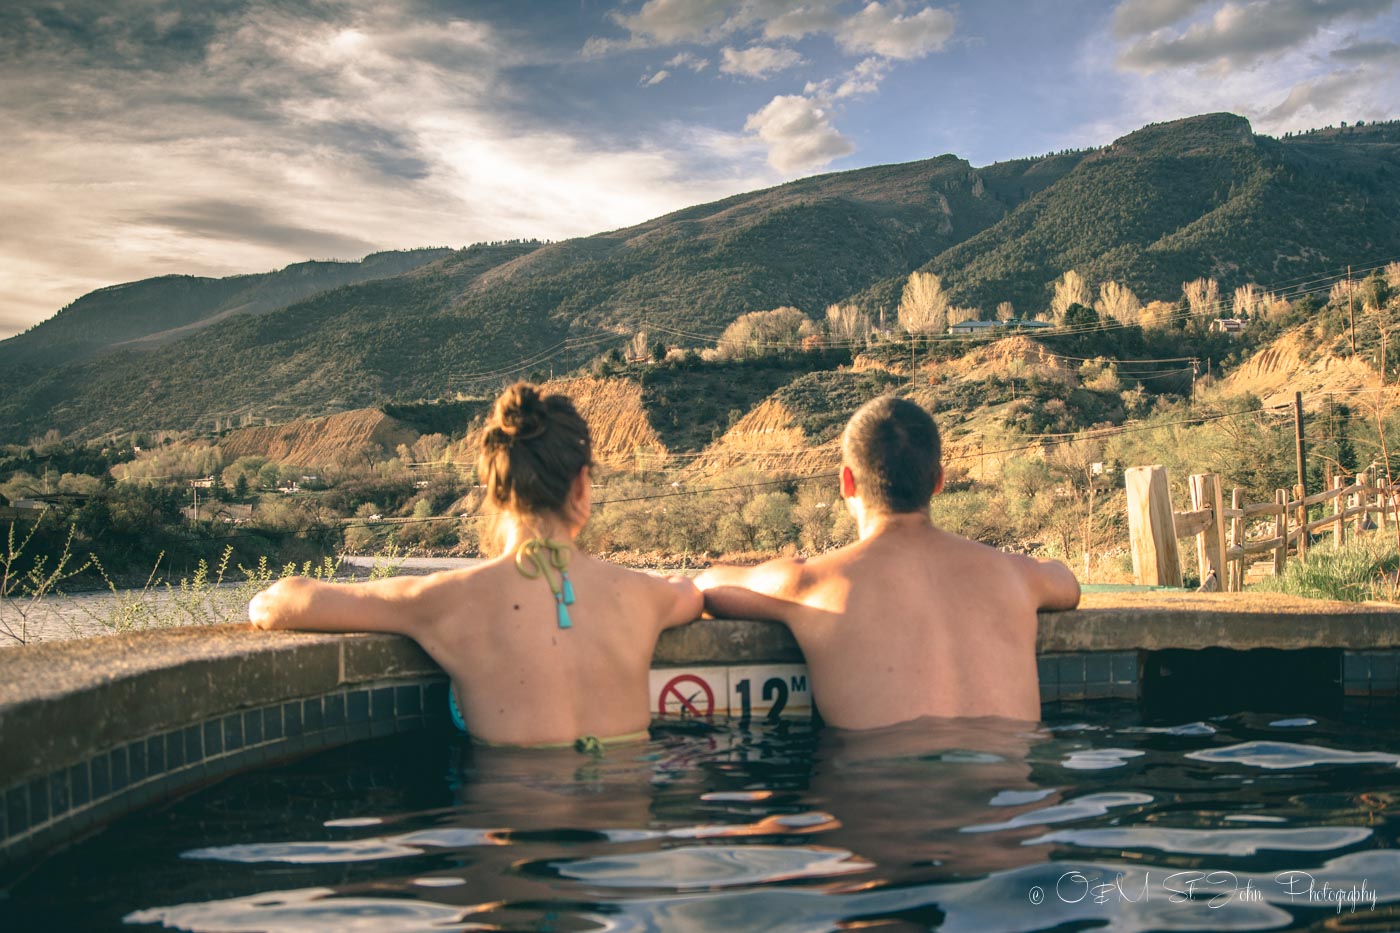 Max & Oksana at Iron Mountain Hot Springs in Glenwood Springs, Colorado. USA road trip